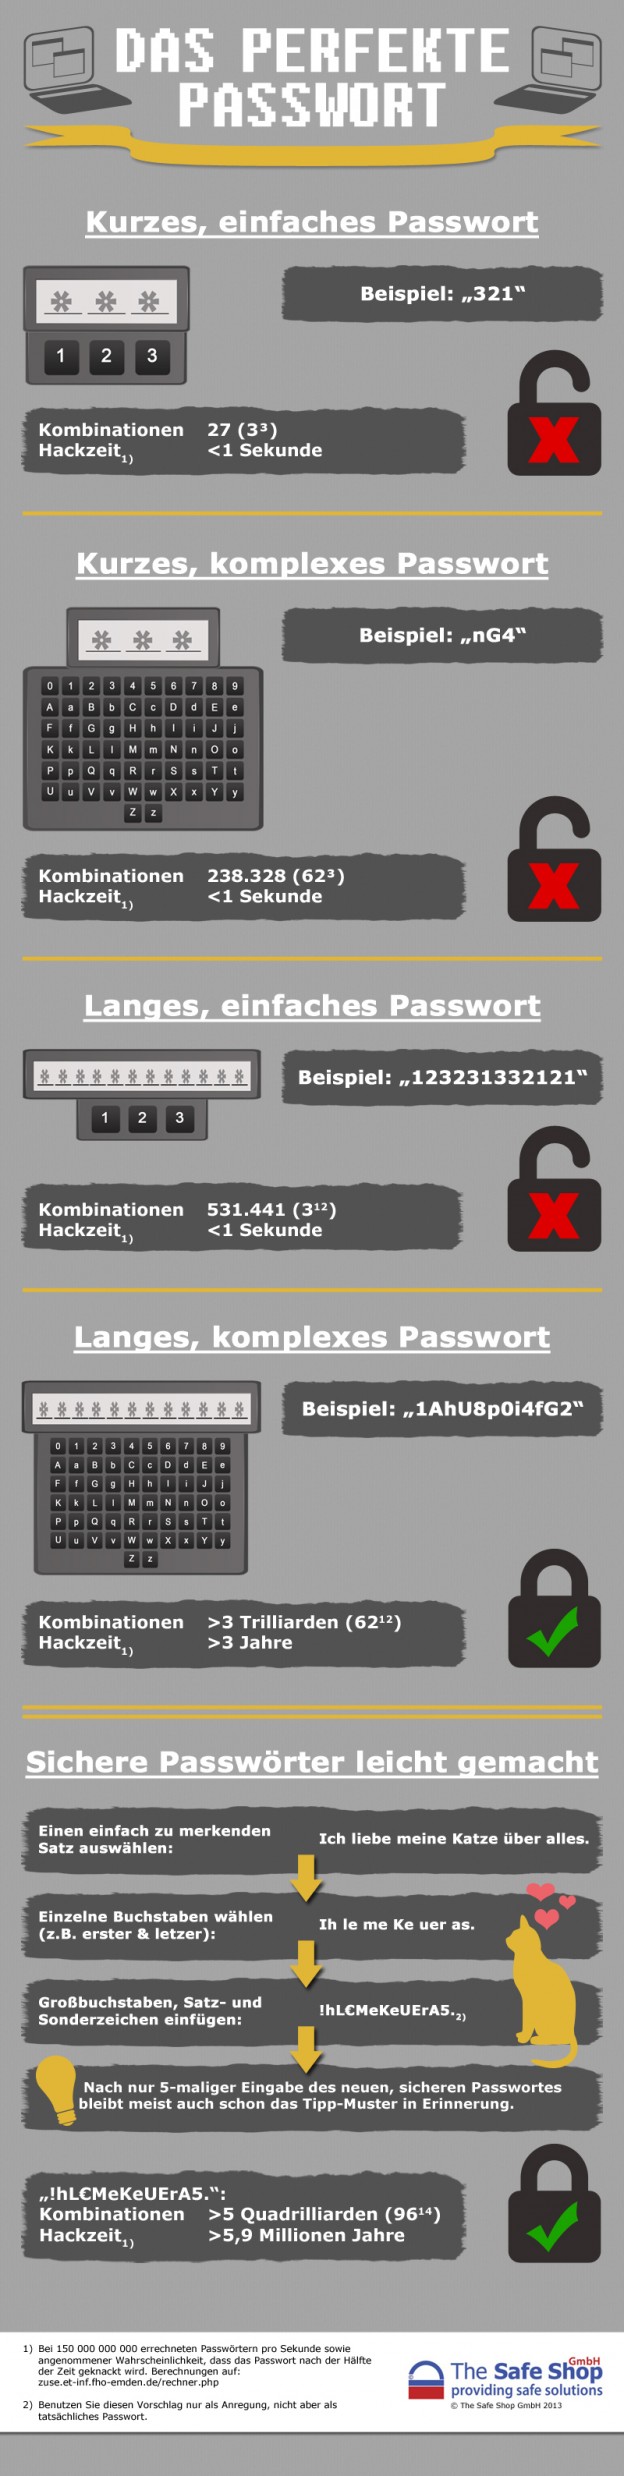 sicheres-passwort-infografik1-624x2476